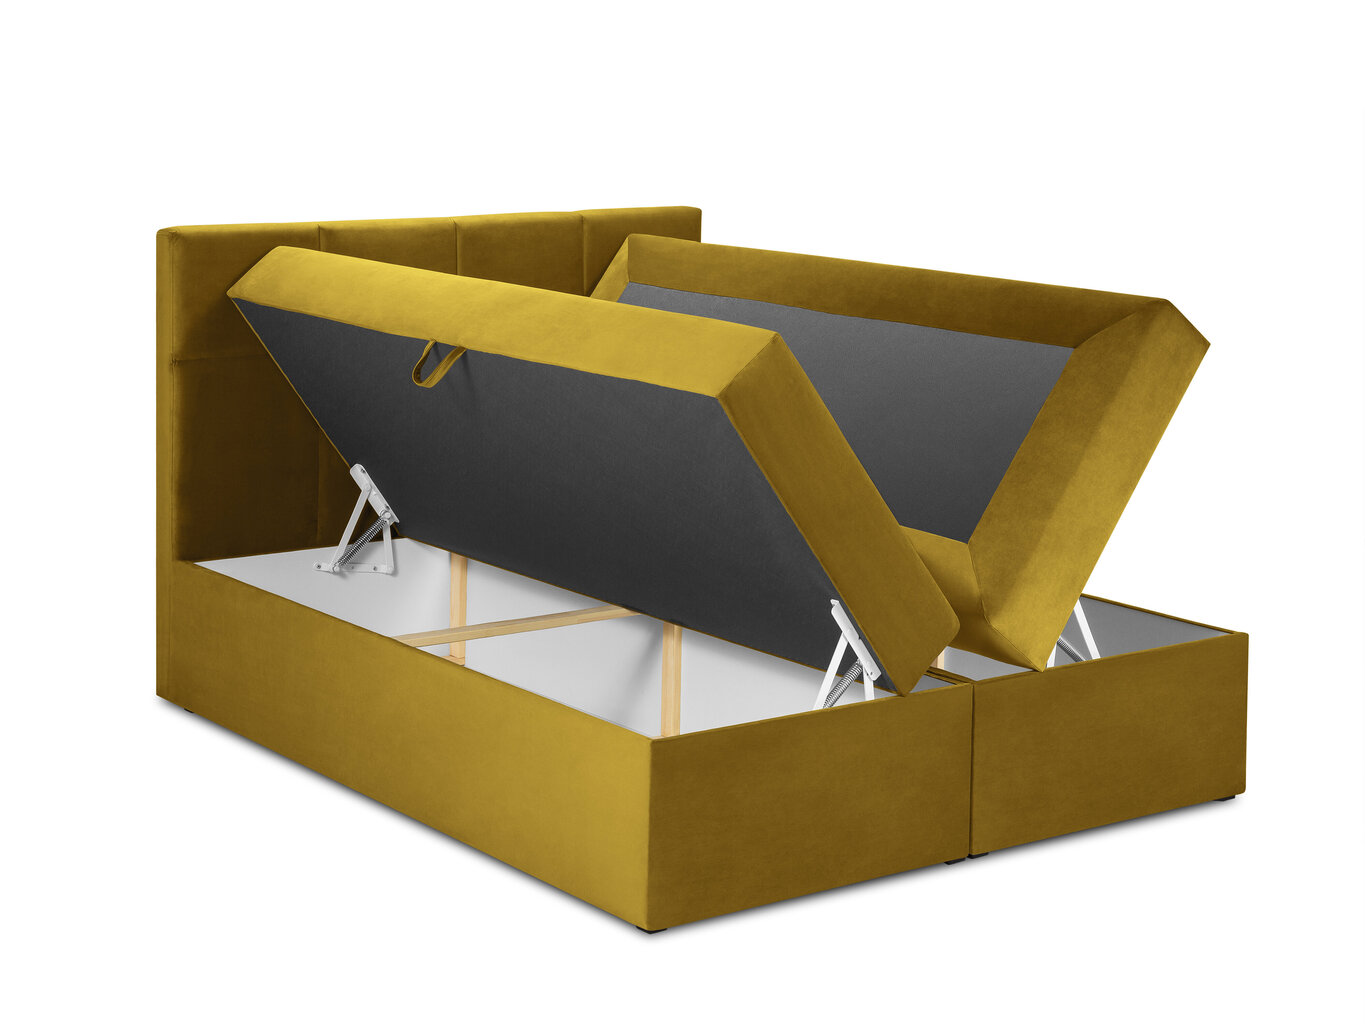 Lova Mazzini Beds Mimicry 140x200 cm, geltona цена и информация | Lovos | pigu.lt